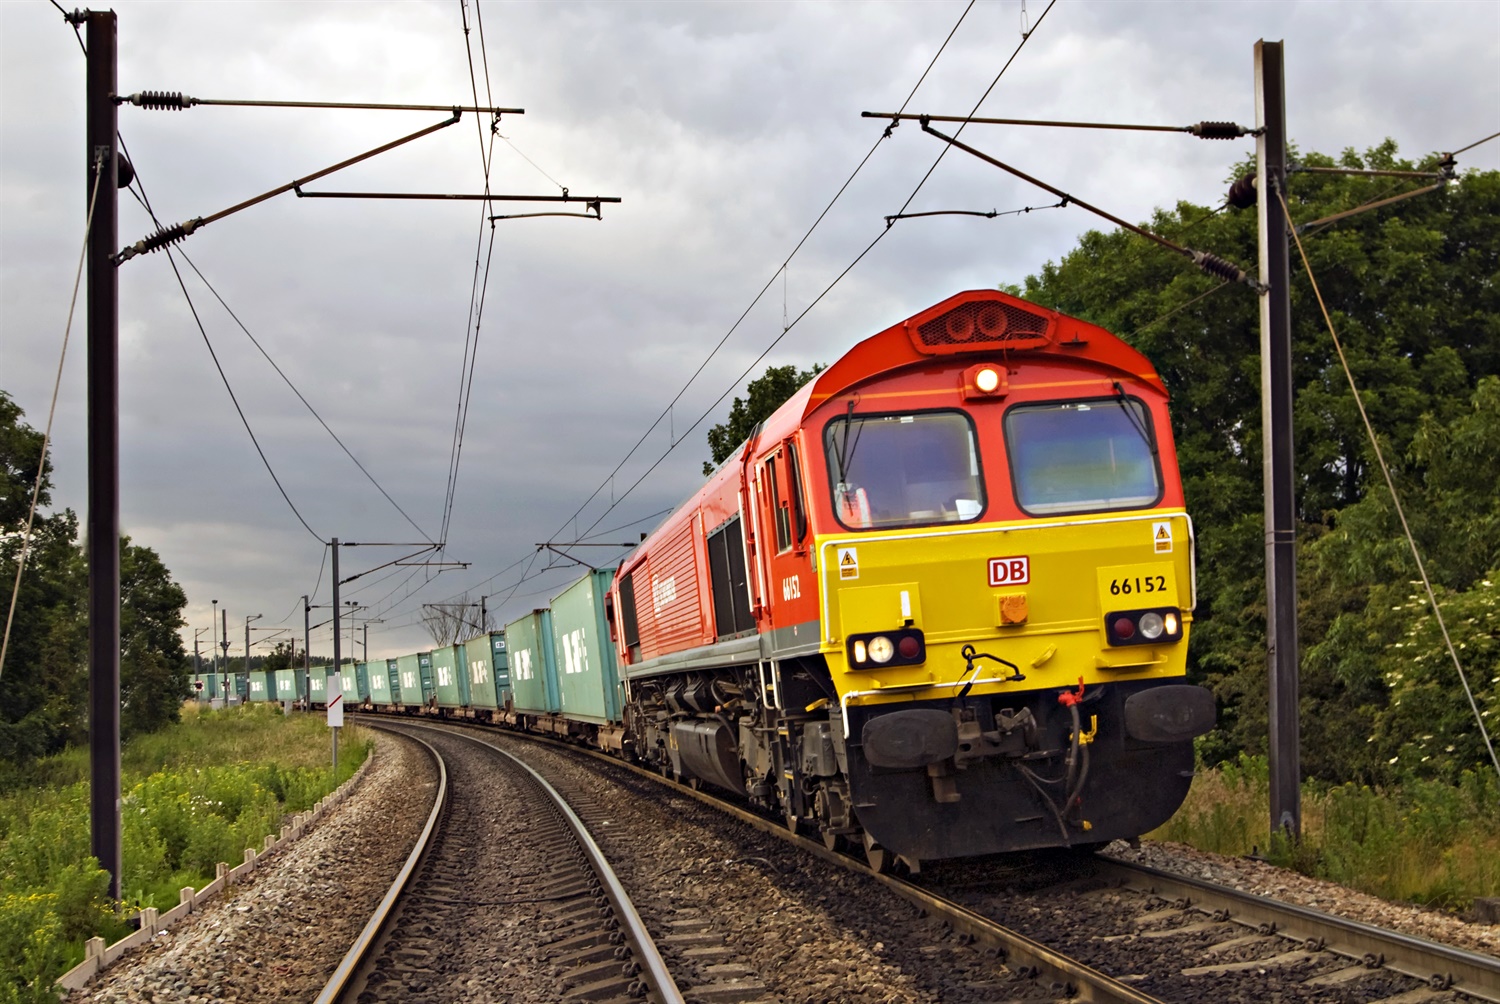 370,000 tonnes of vital supplies moved across the railway last week 